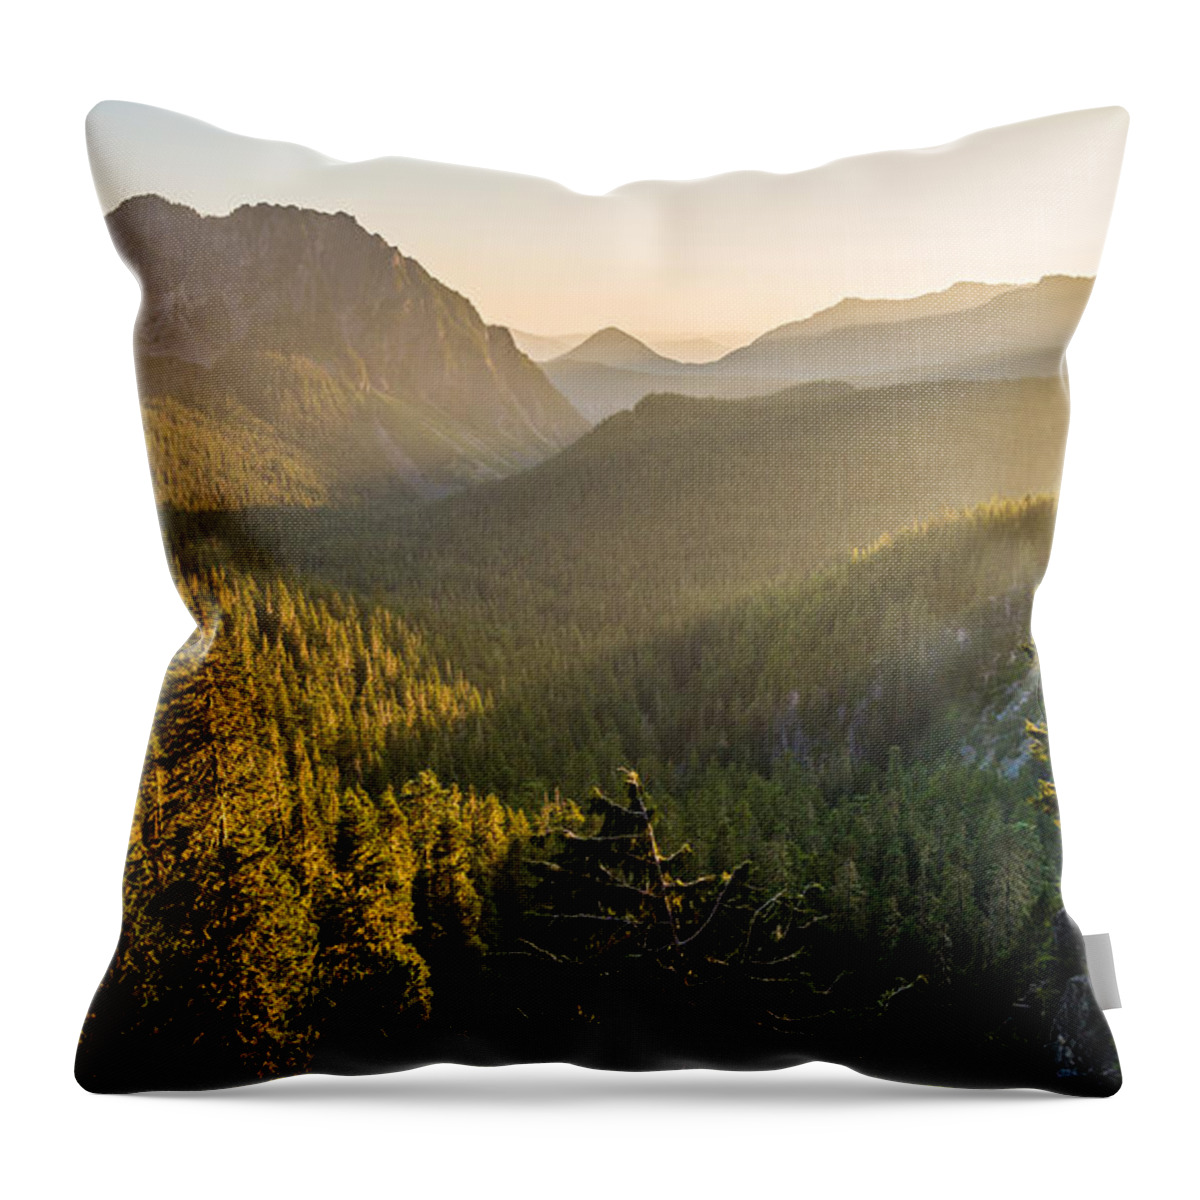 Sunset Throw Pillow featuring the photograph Harsh Light by Kristopher Schoenleber